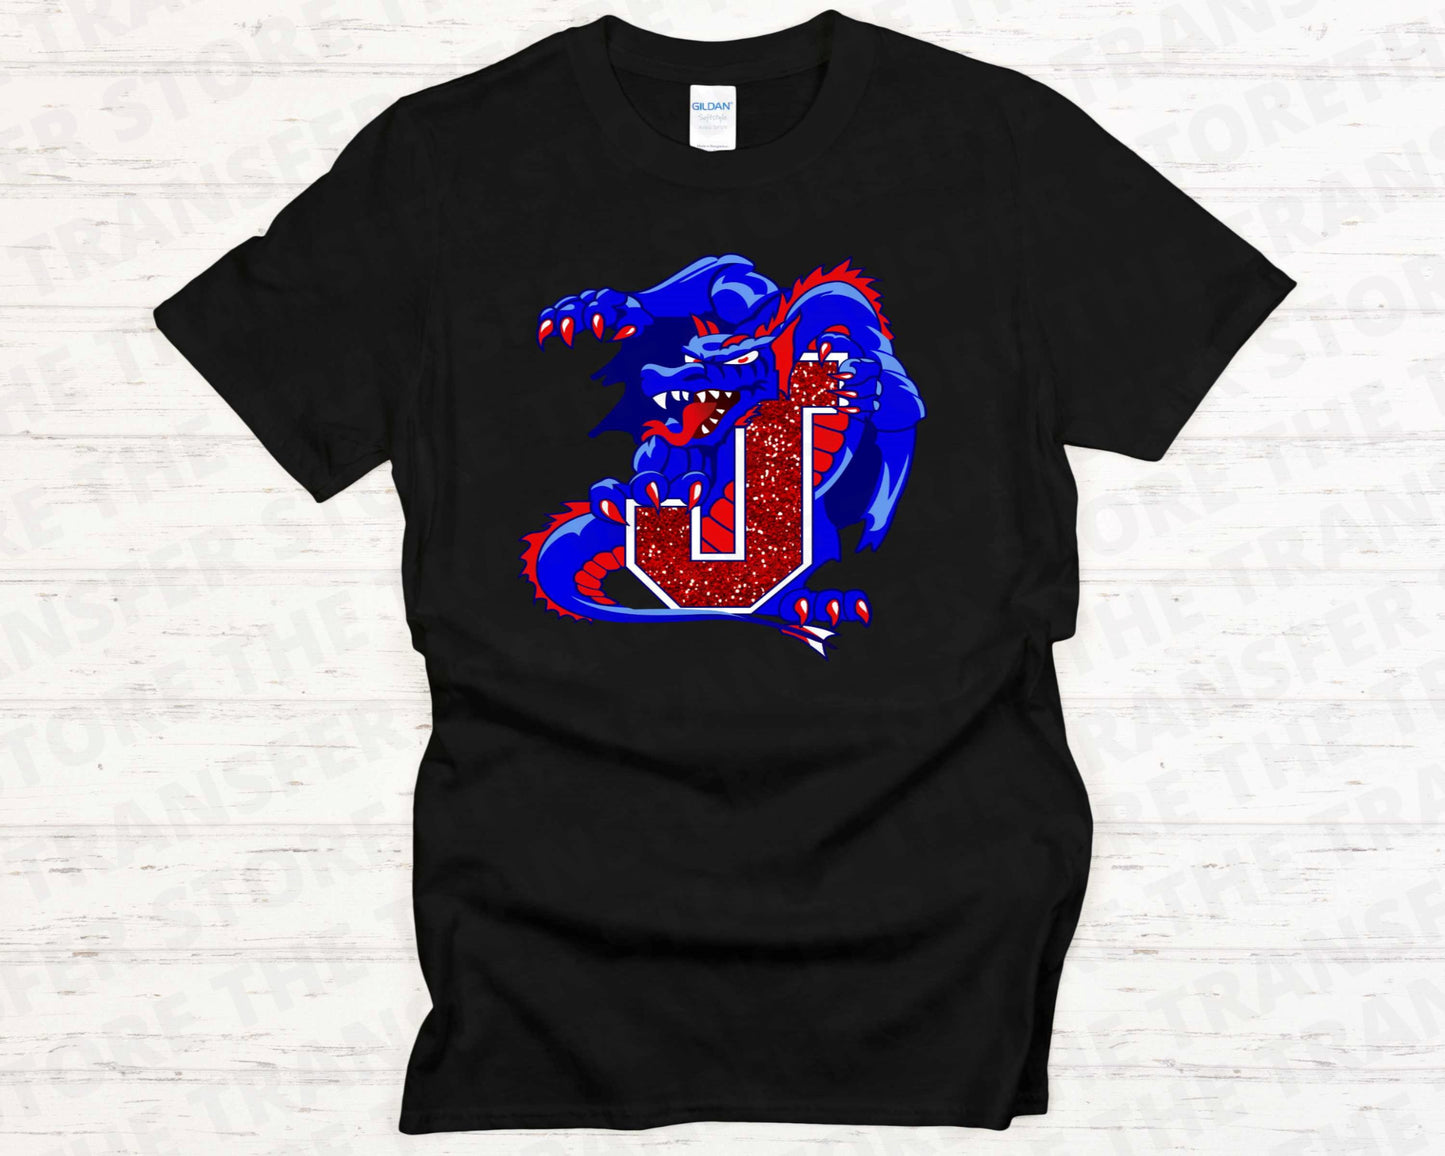 Dragon J Glitter Printed T-Shirt